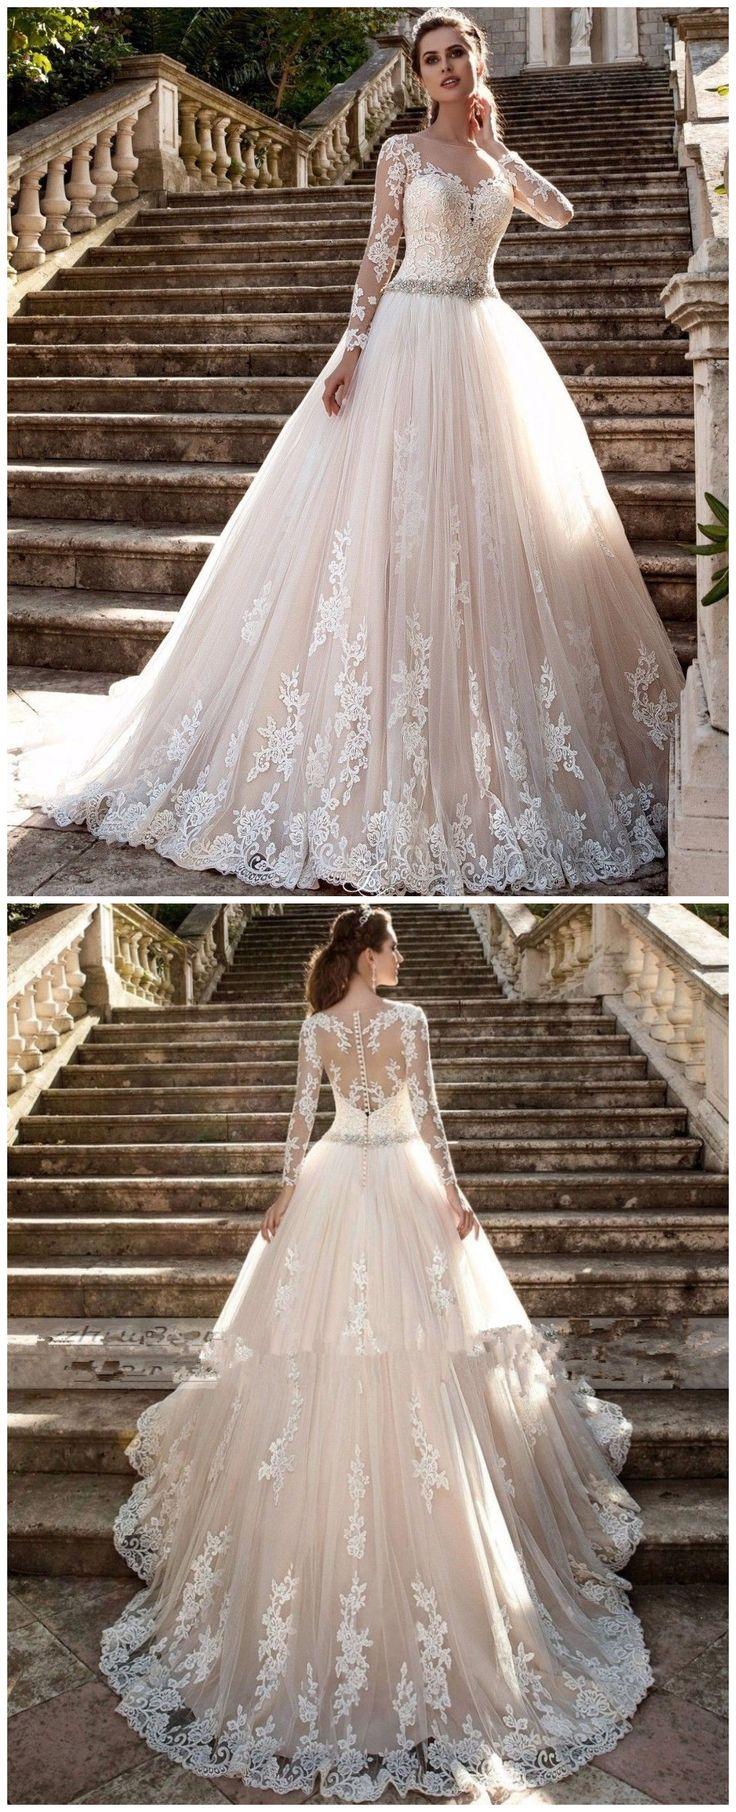 Wedding - Lace Bridal Ball Gown White Ivory Wedding Dress Custom Size Bridal Dresses From Olesa Wedding Shop